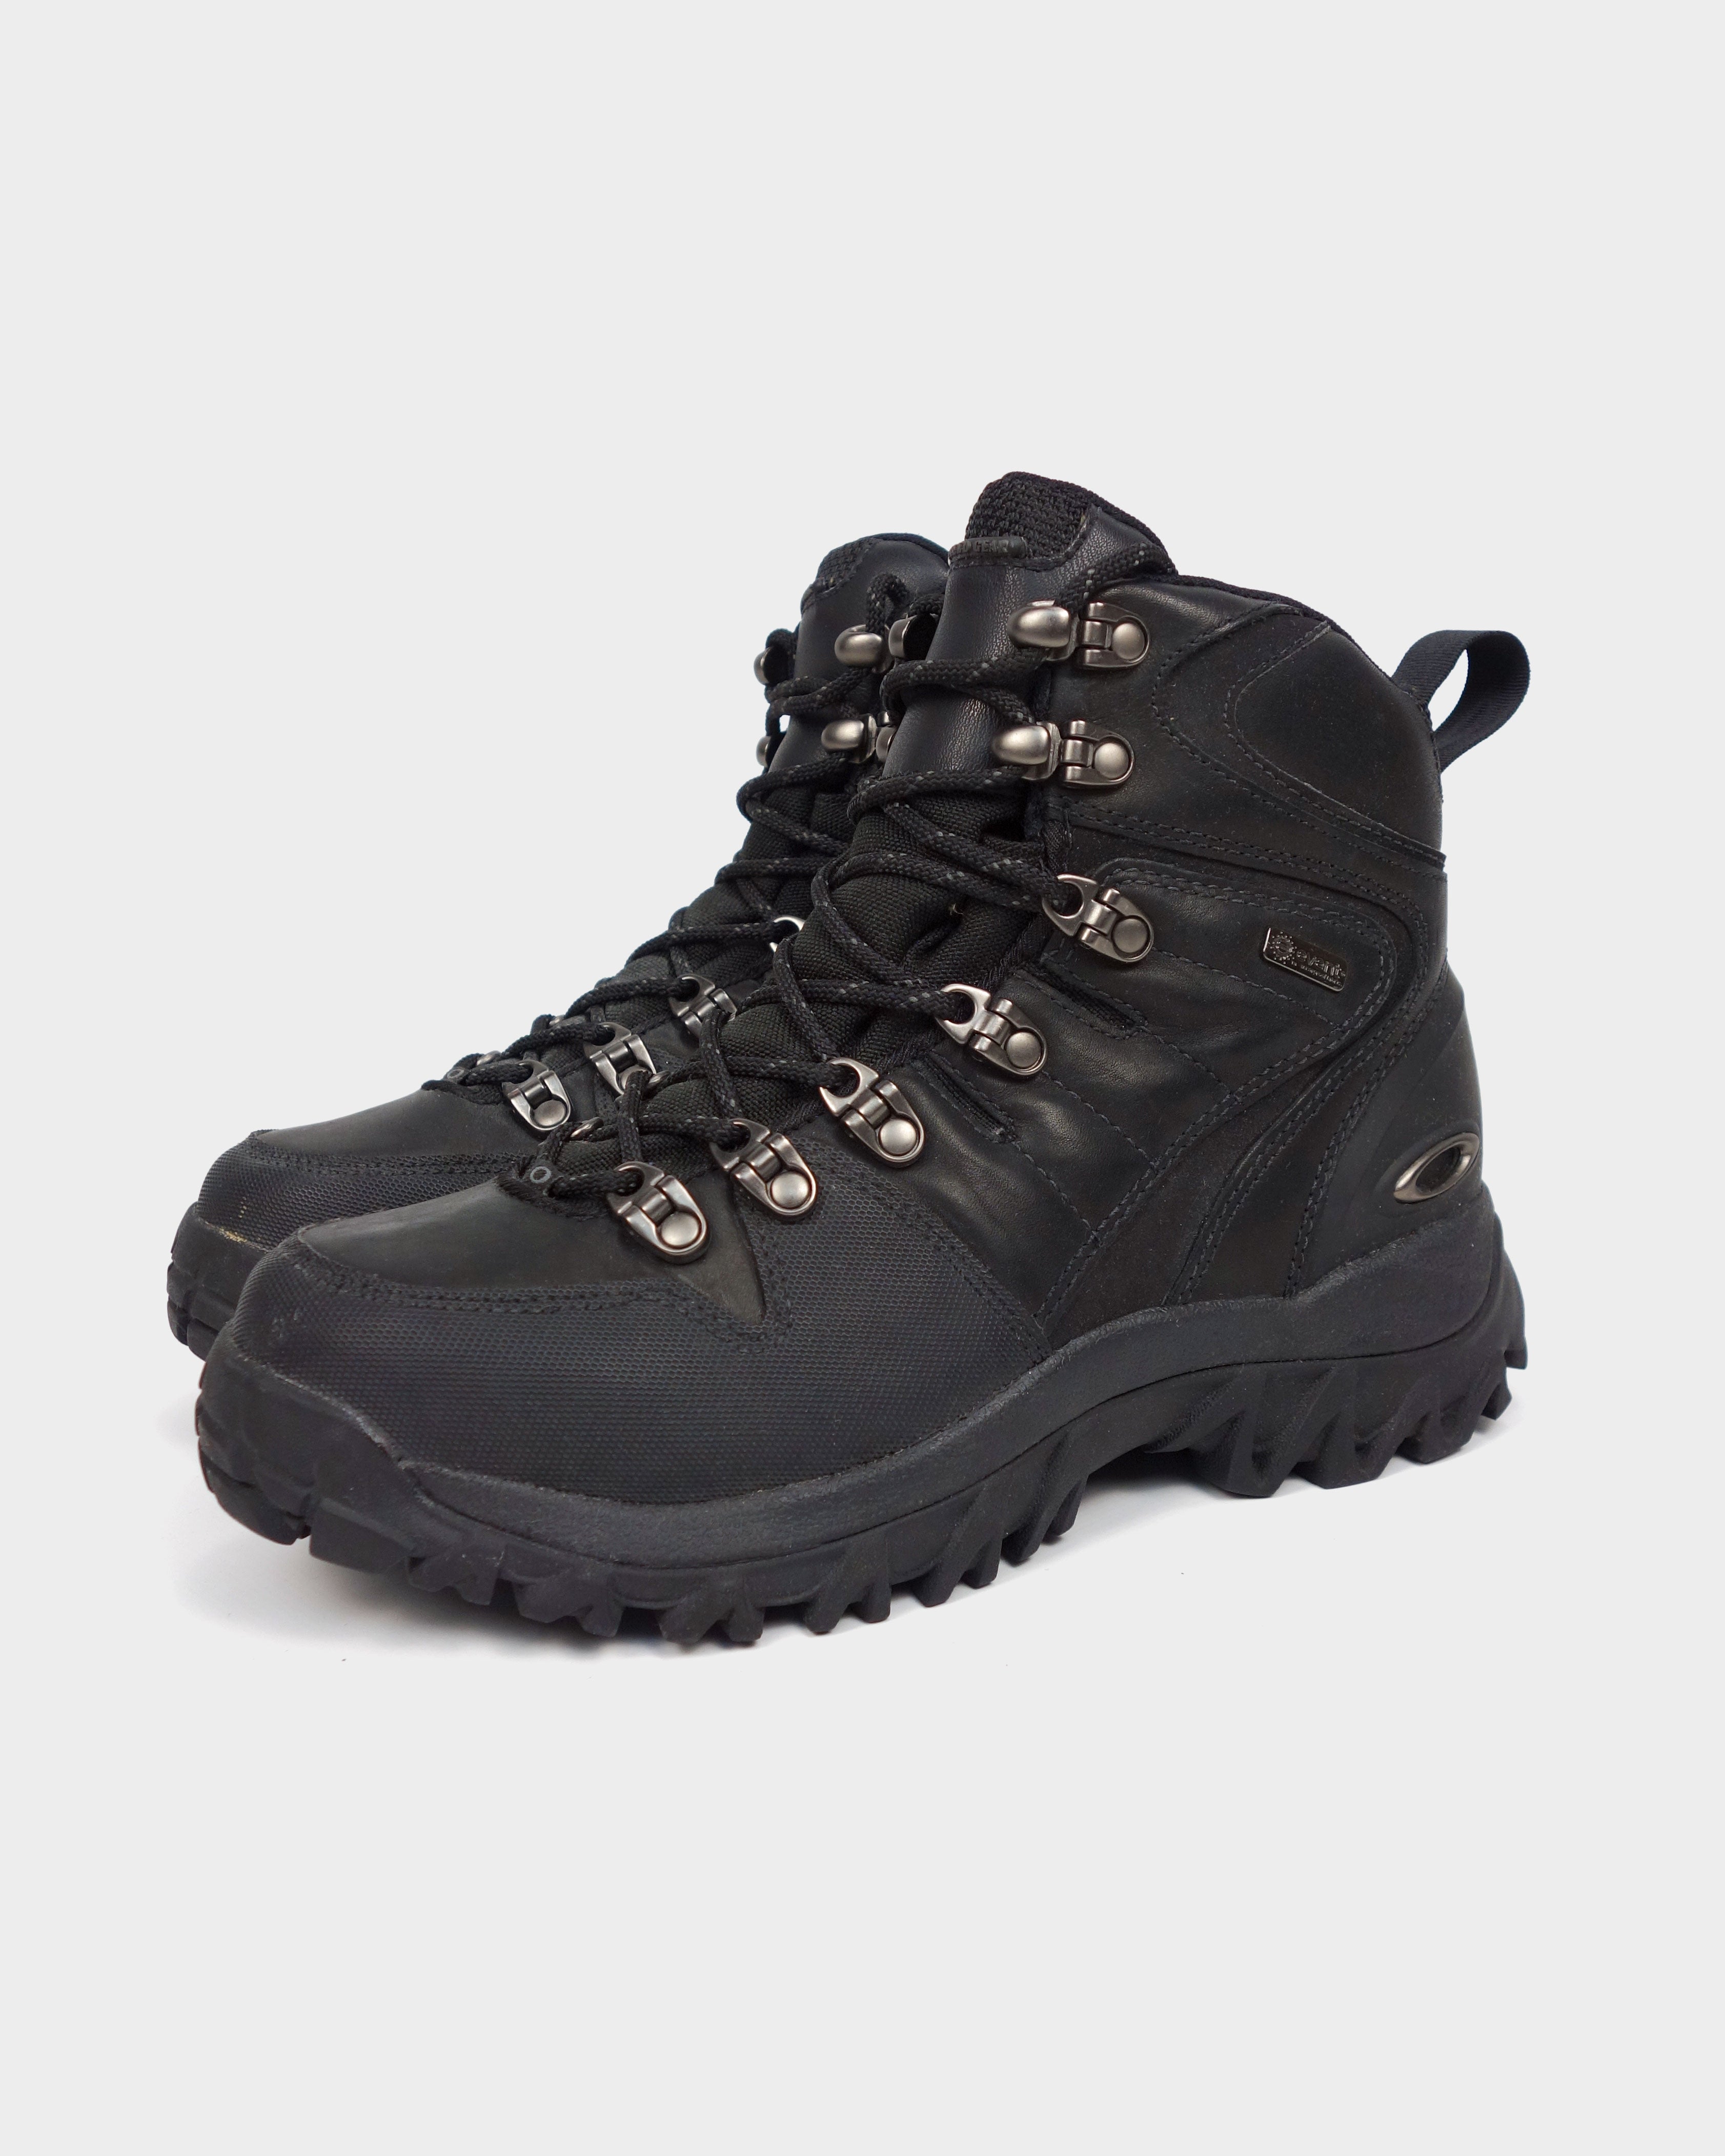 1999s oakley leather trekking boots 28.024000では厳しいでしょうか